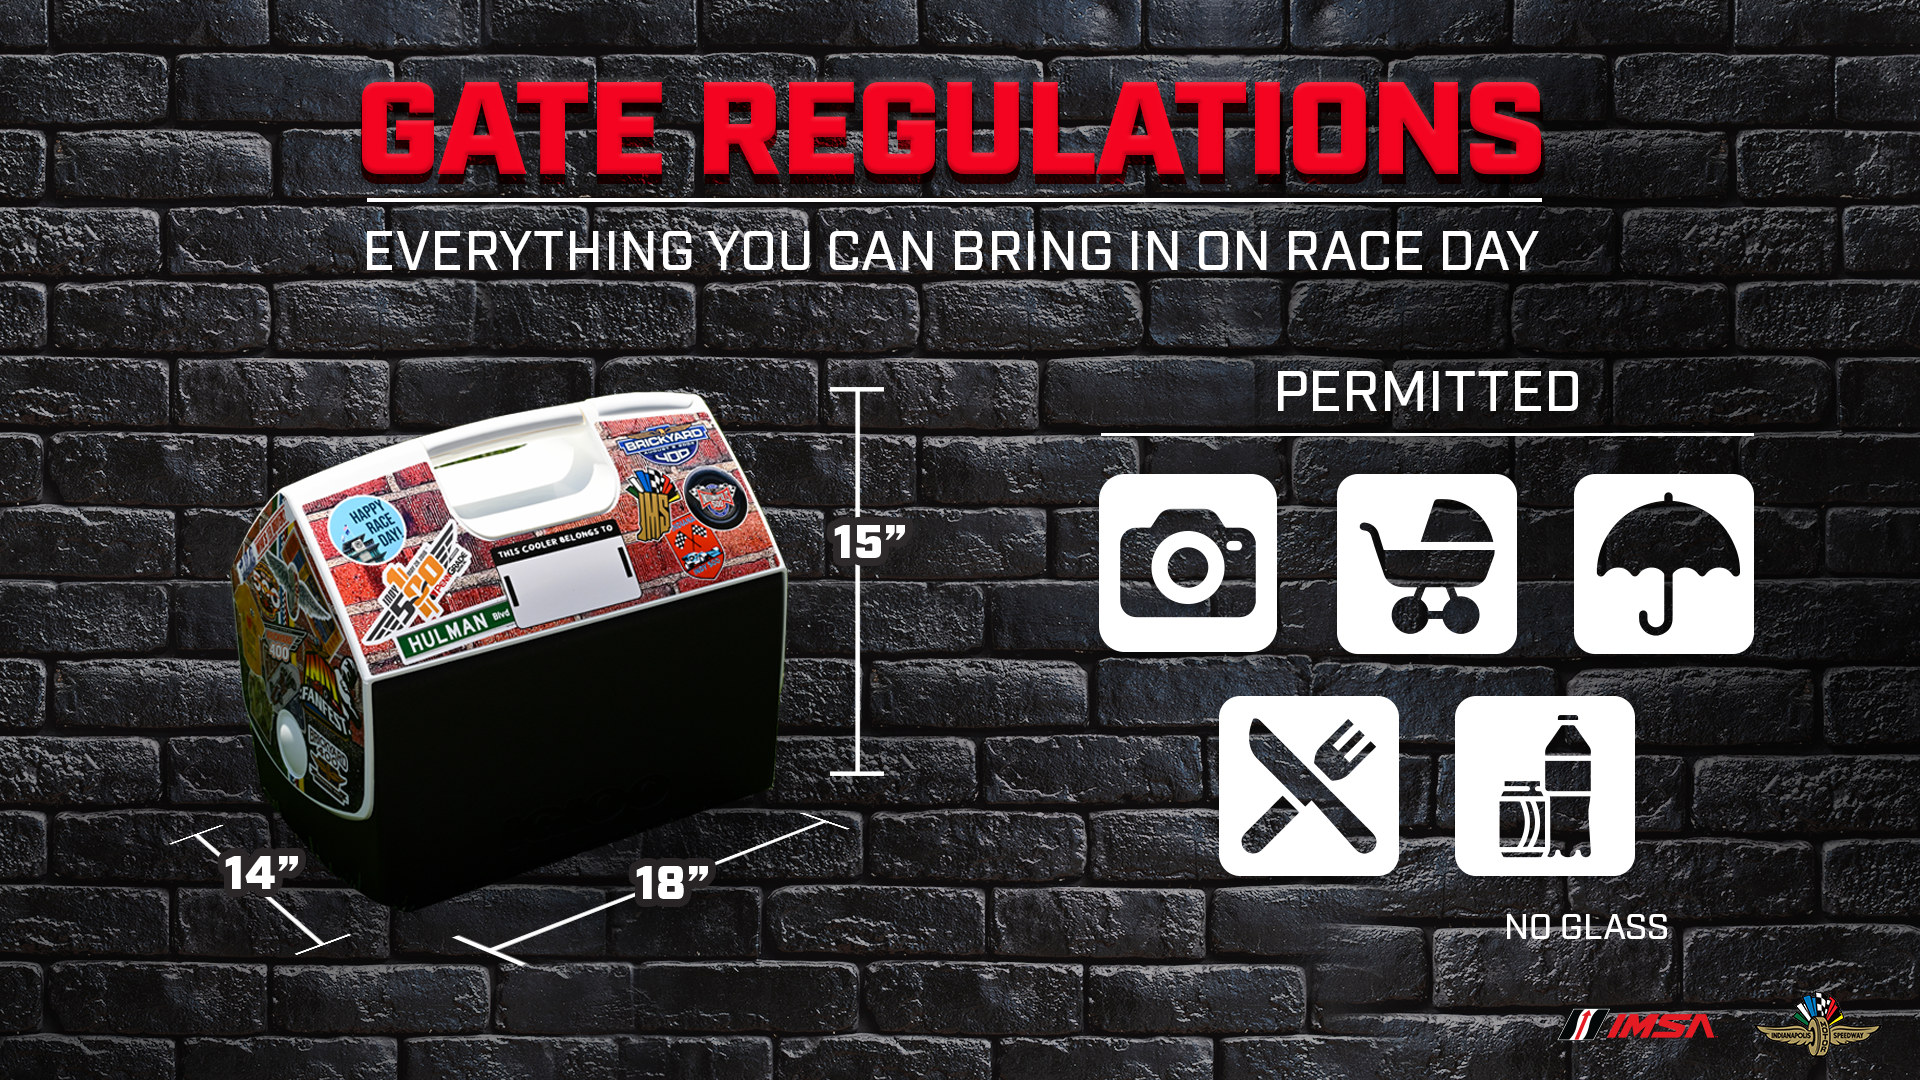 Gate Regulations